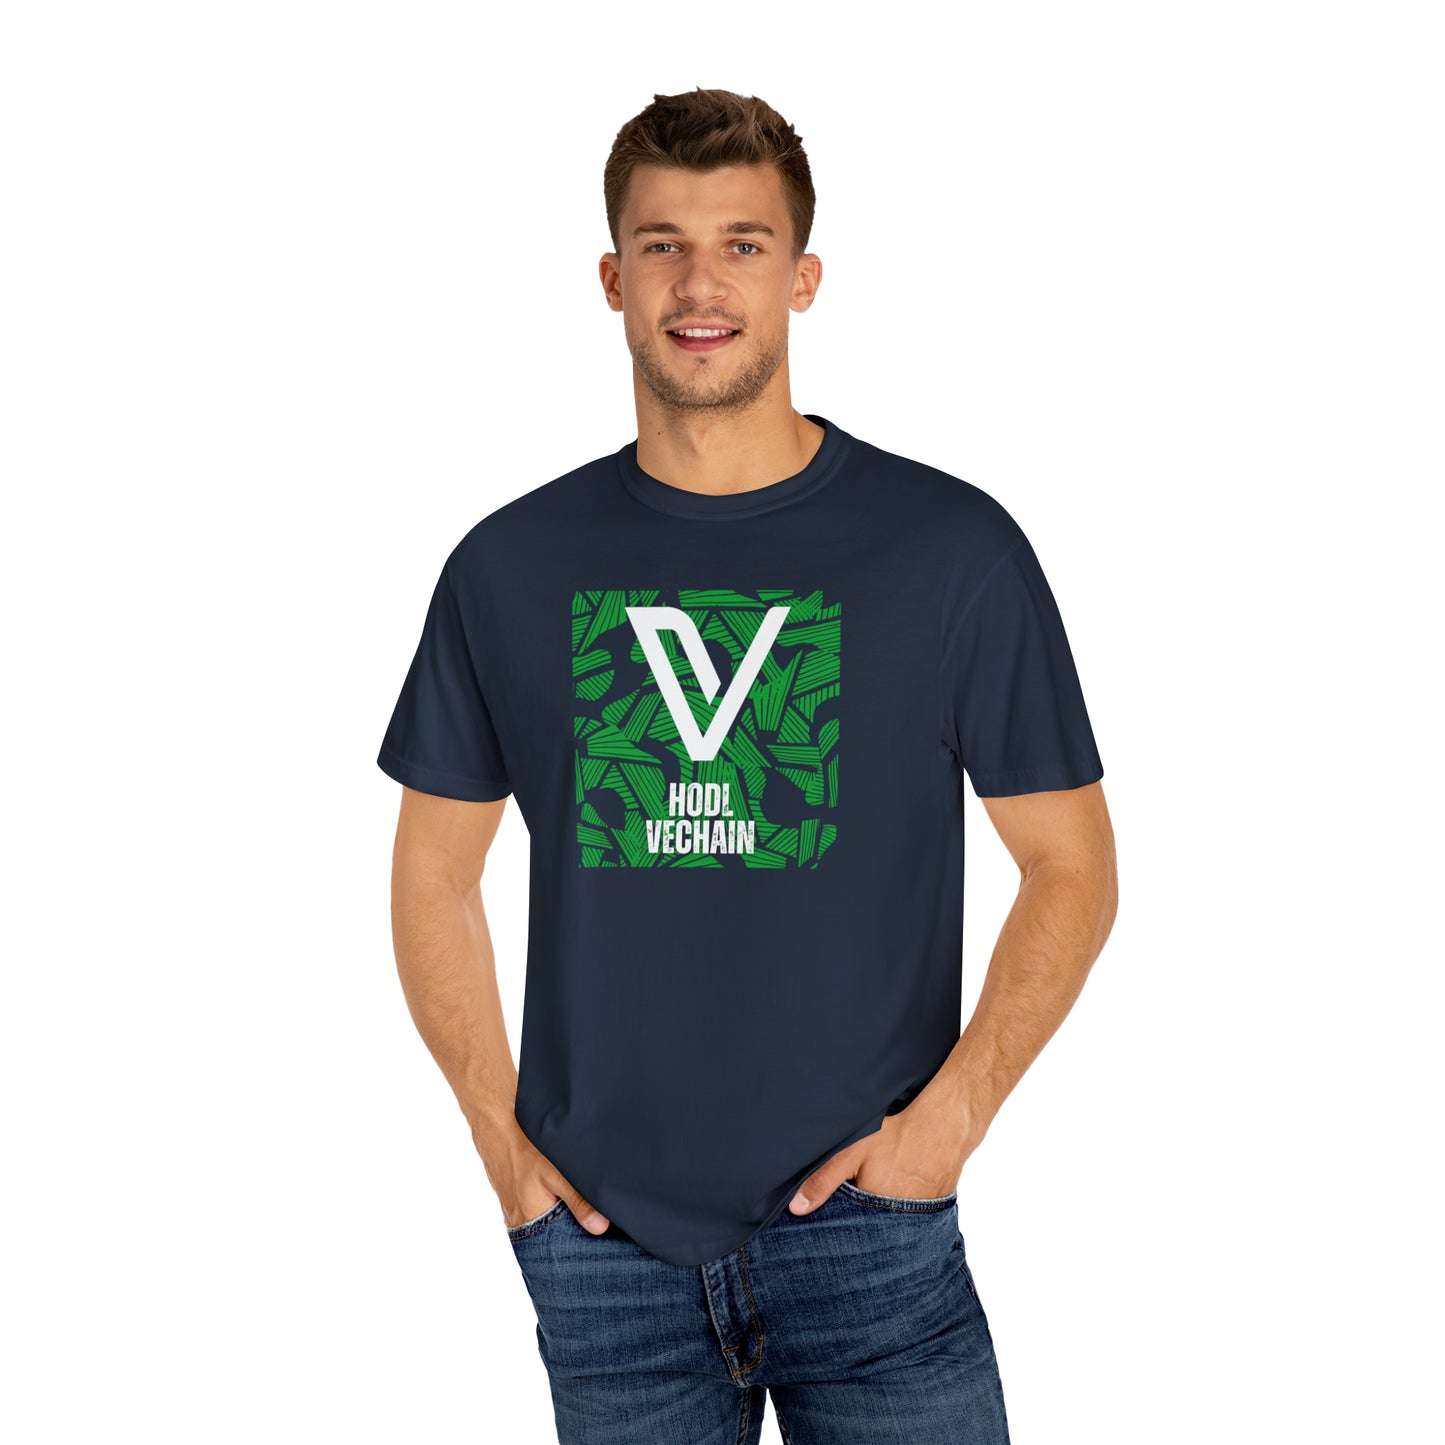 Unisex Garment-Dyed Vechain HODL T-shirt